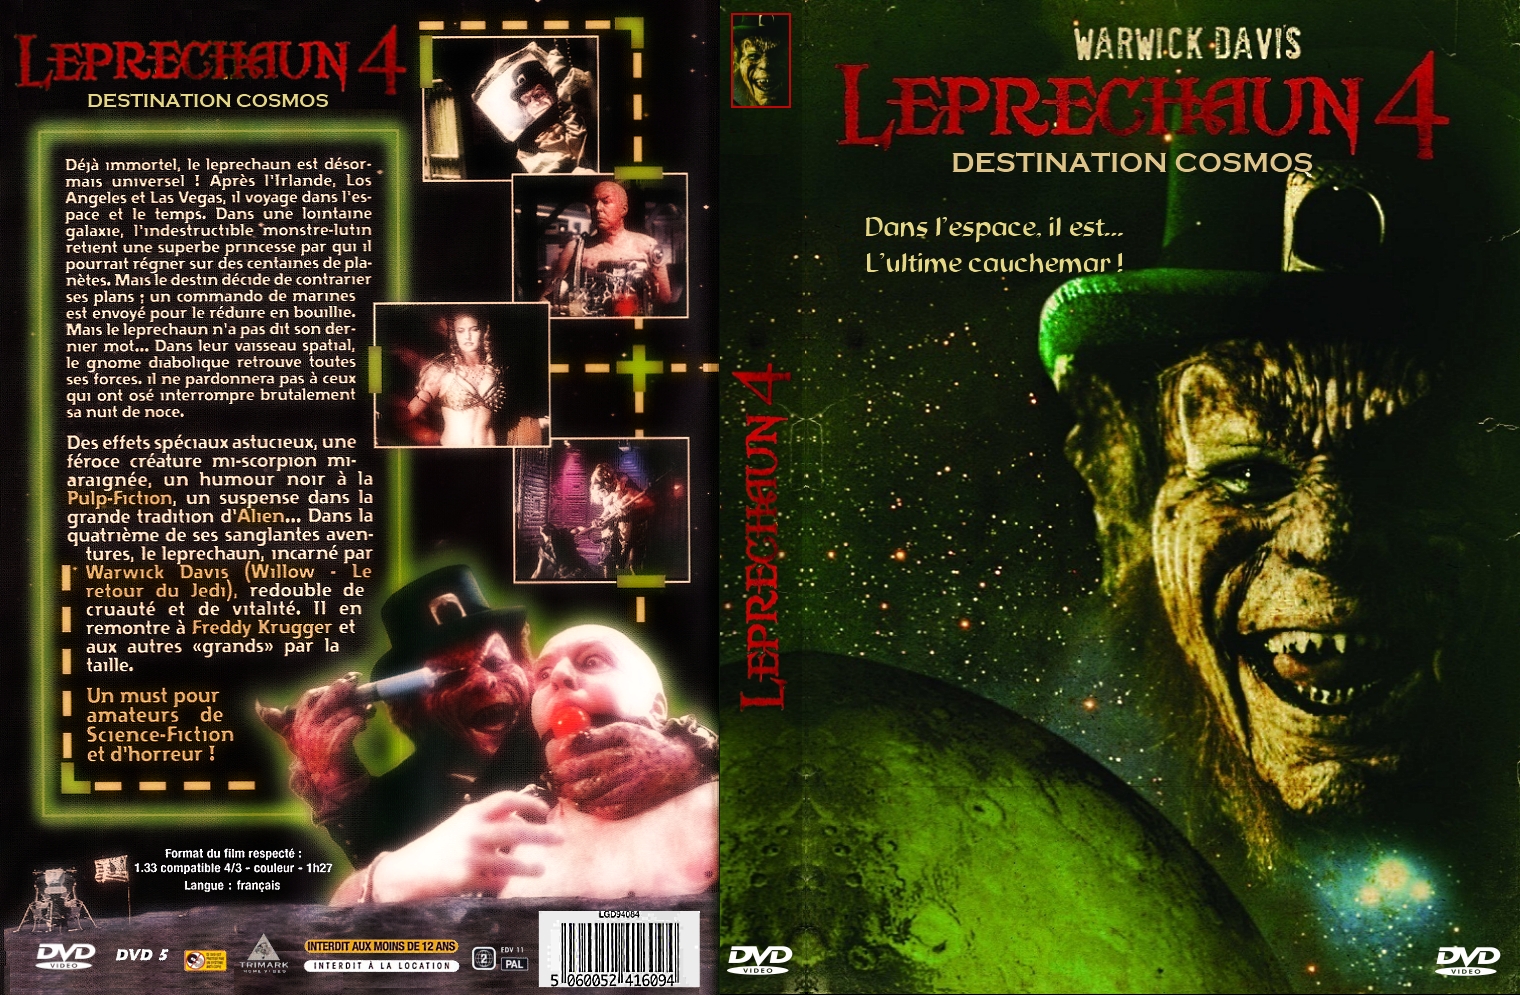 Jaquette DVD Leprechaun destination cosmos v2